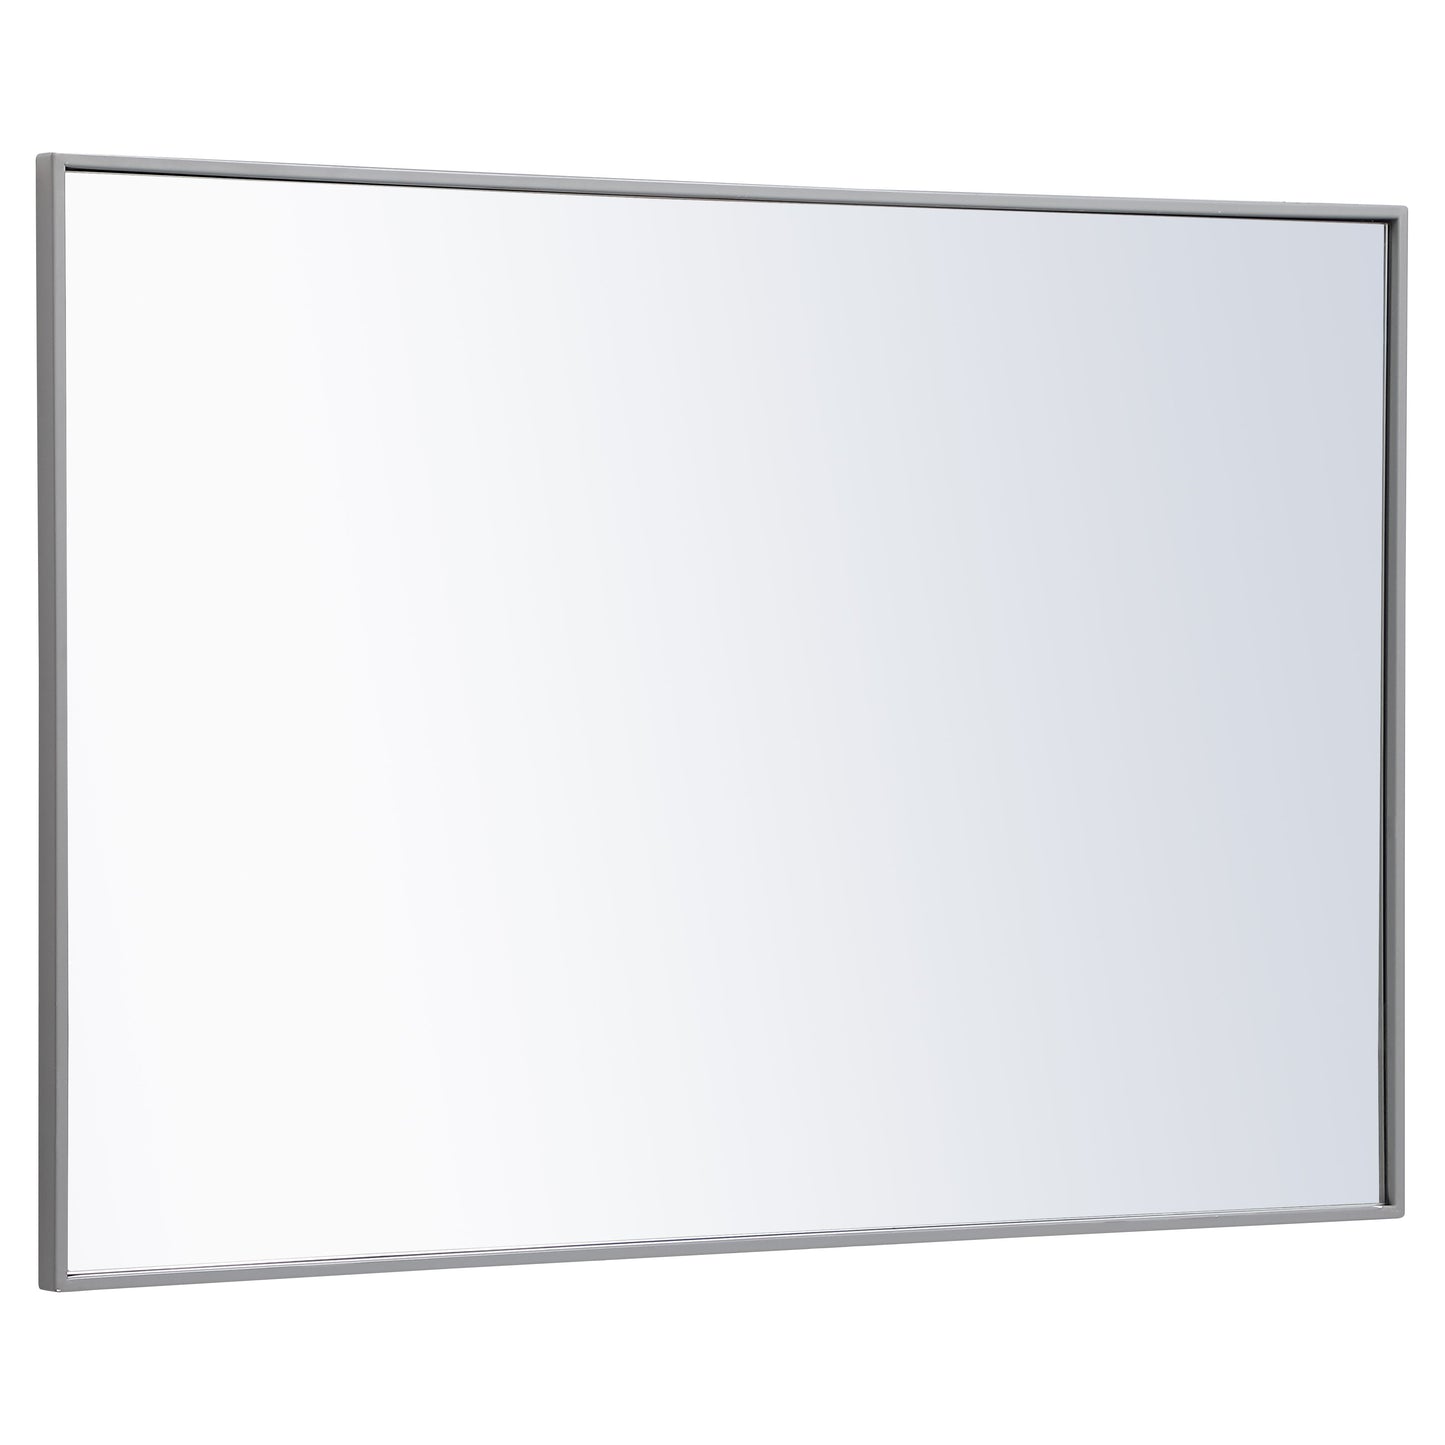 MR4077GR Monet 28" x 42" Metal Framed Rectangular Mirror in Grey